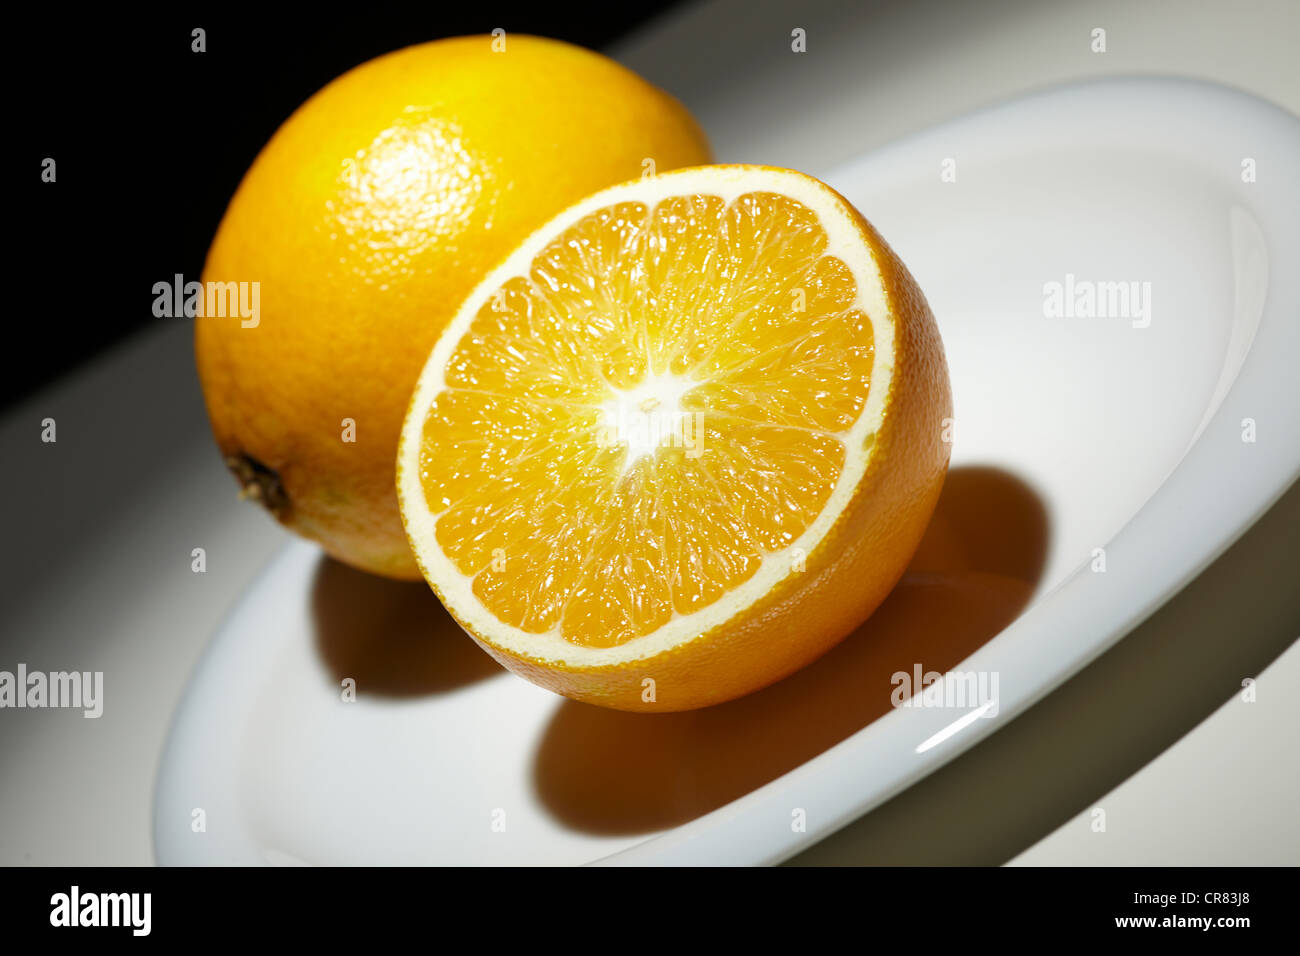 Naranja (Citrus sinensis) en una placa blanca. Foto de stock